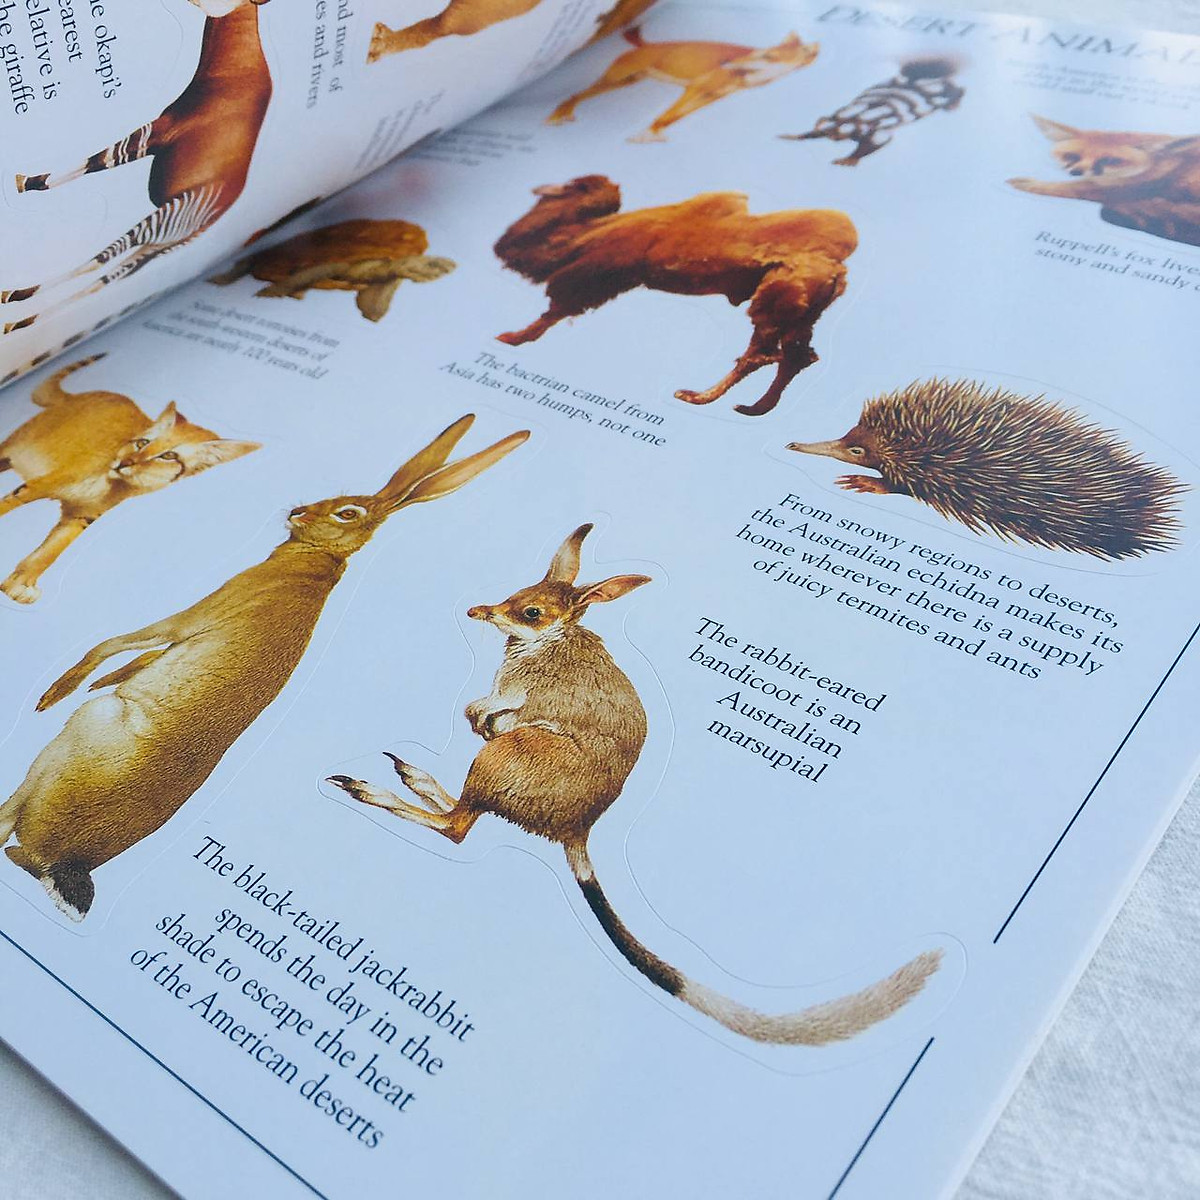 Ultimate Sticker Book Animal